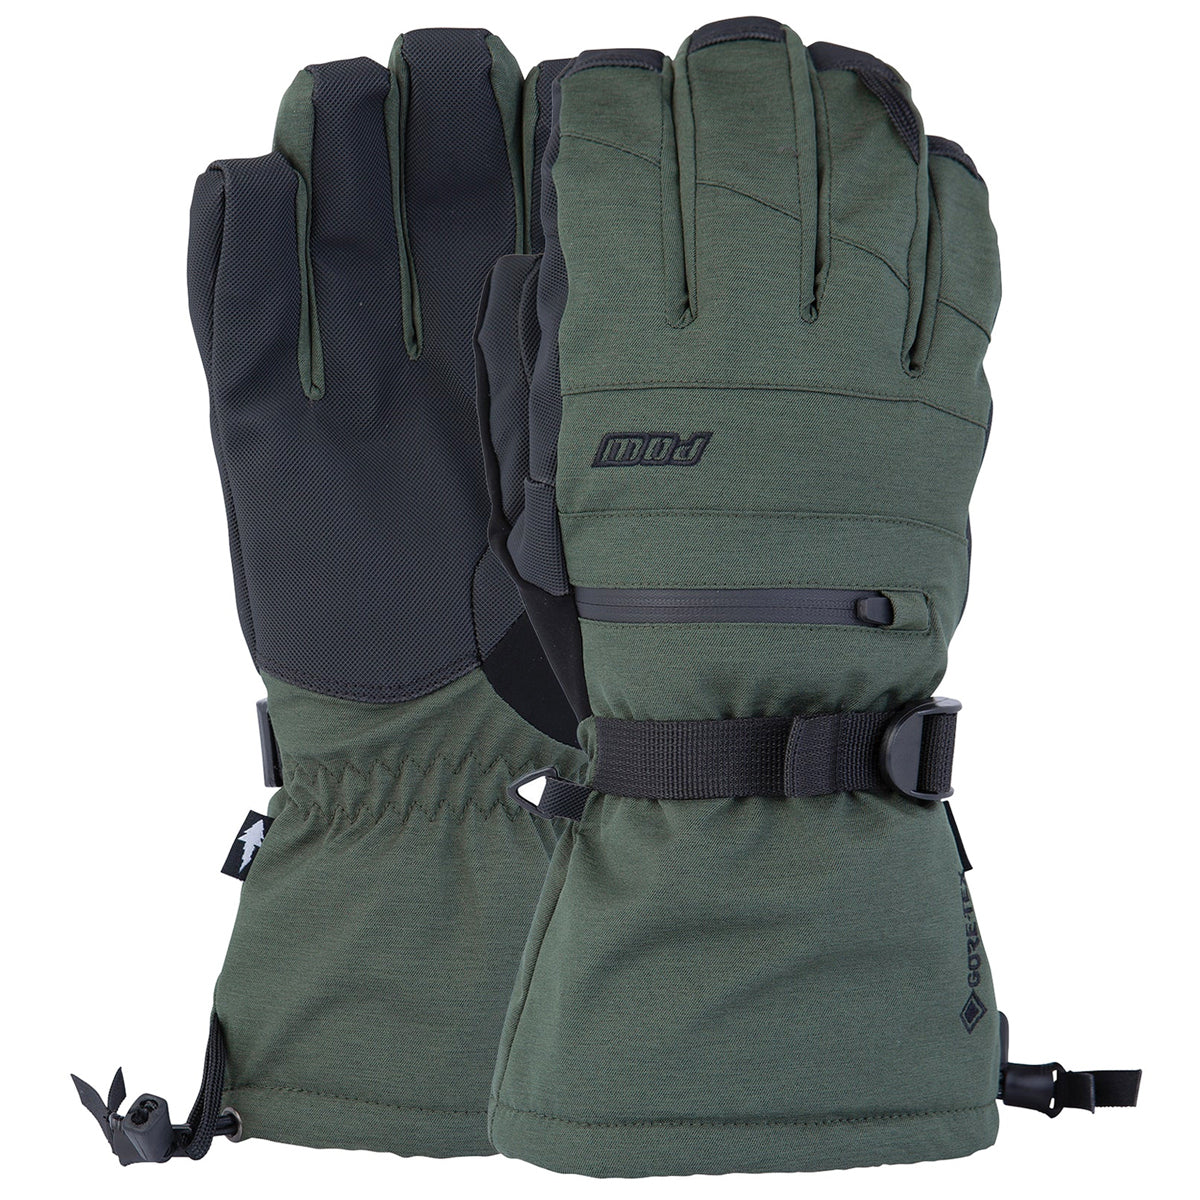 POW Wayback GTX Long Glove Warm Snowboard Gloves - Kombu Green image 1